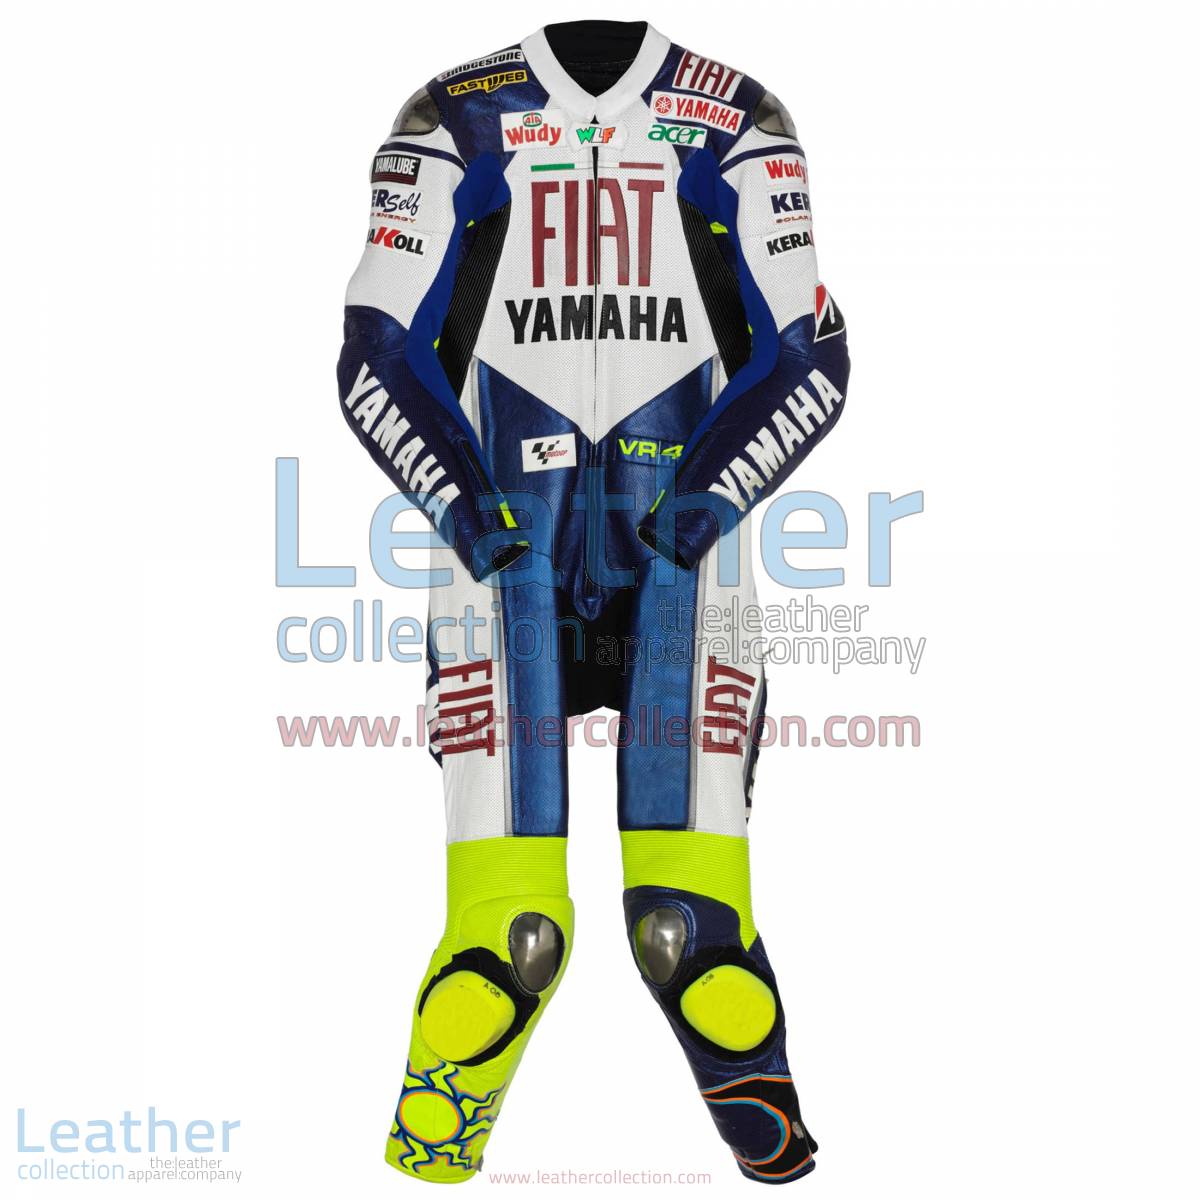 Valentino Rossi Yamaha Fiat MotoGP 2008 Racing Suit